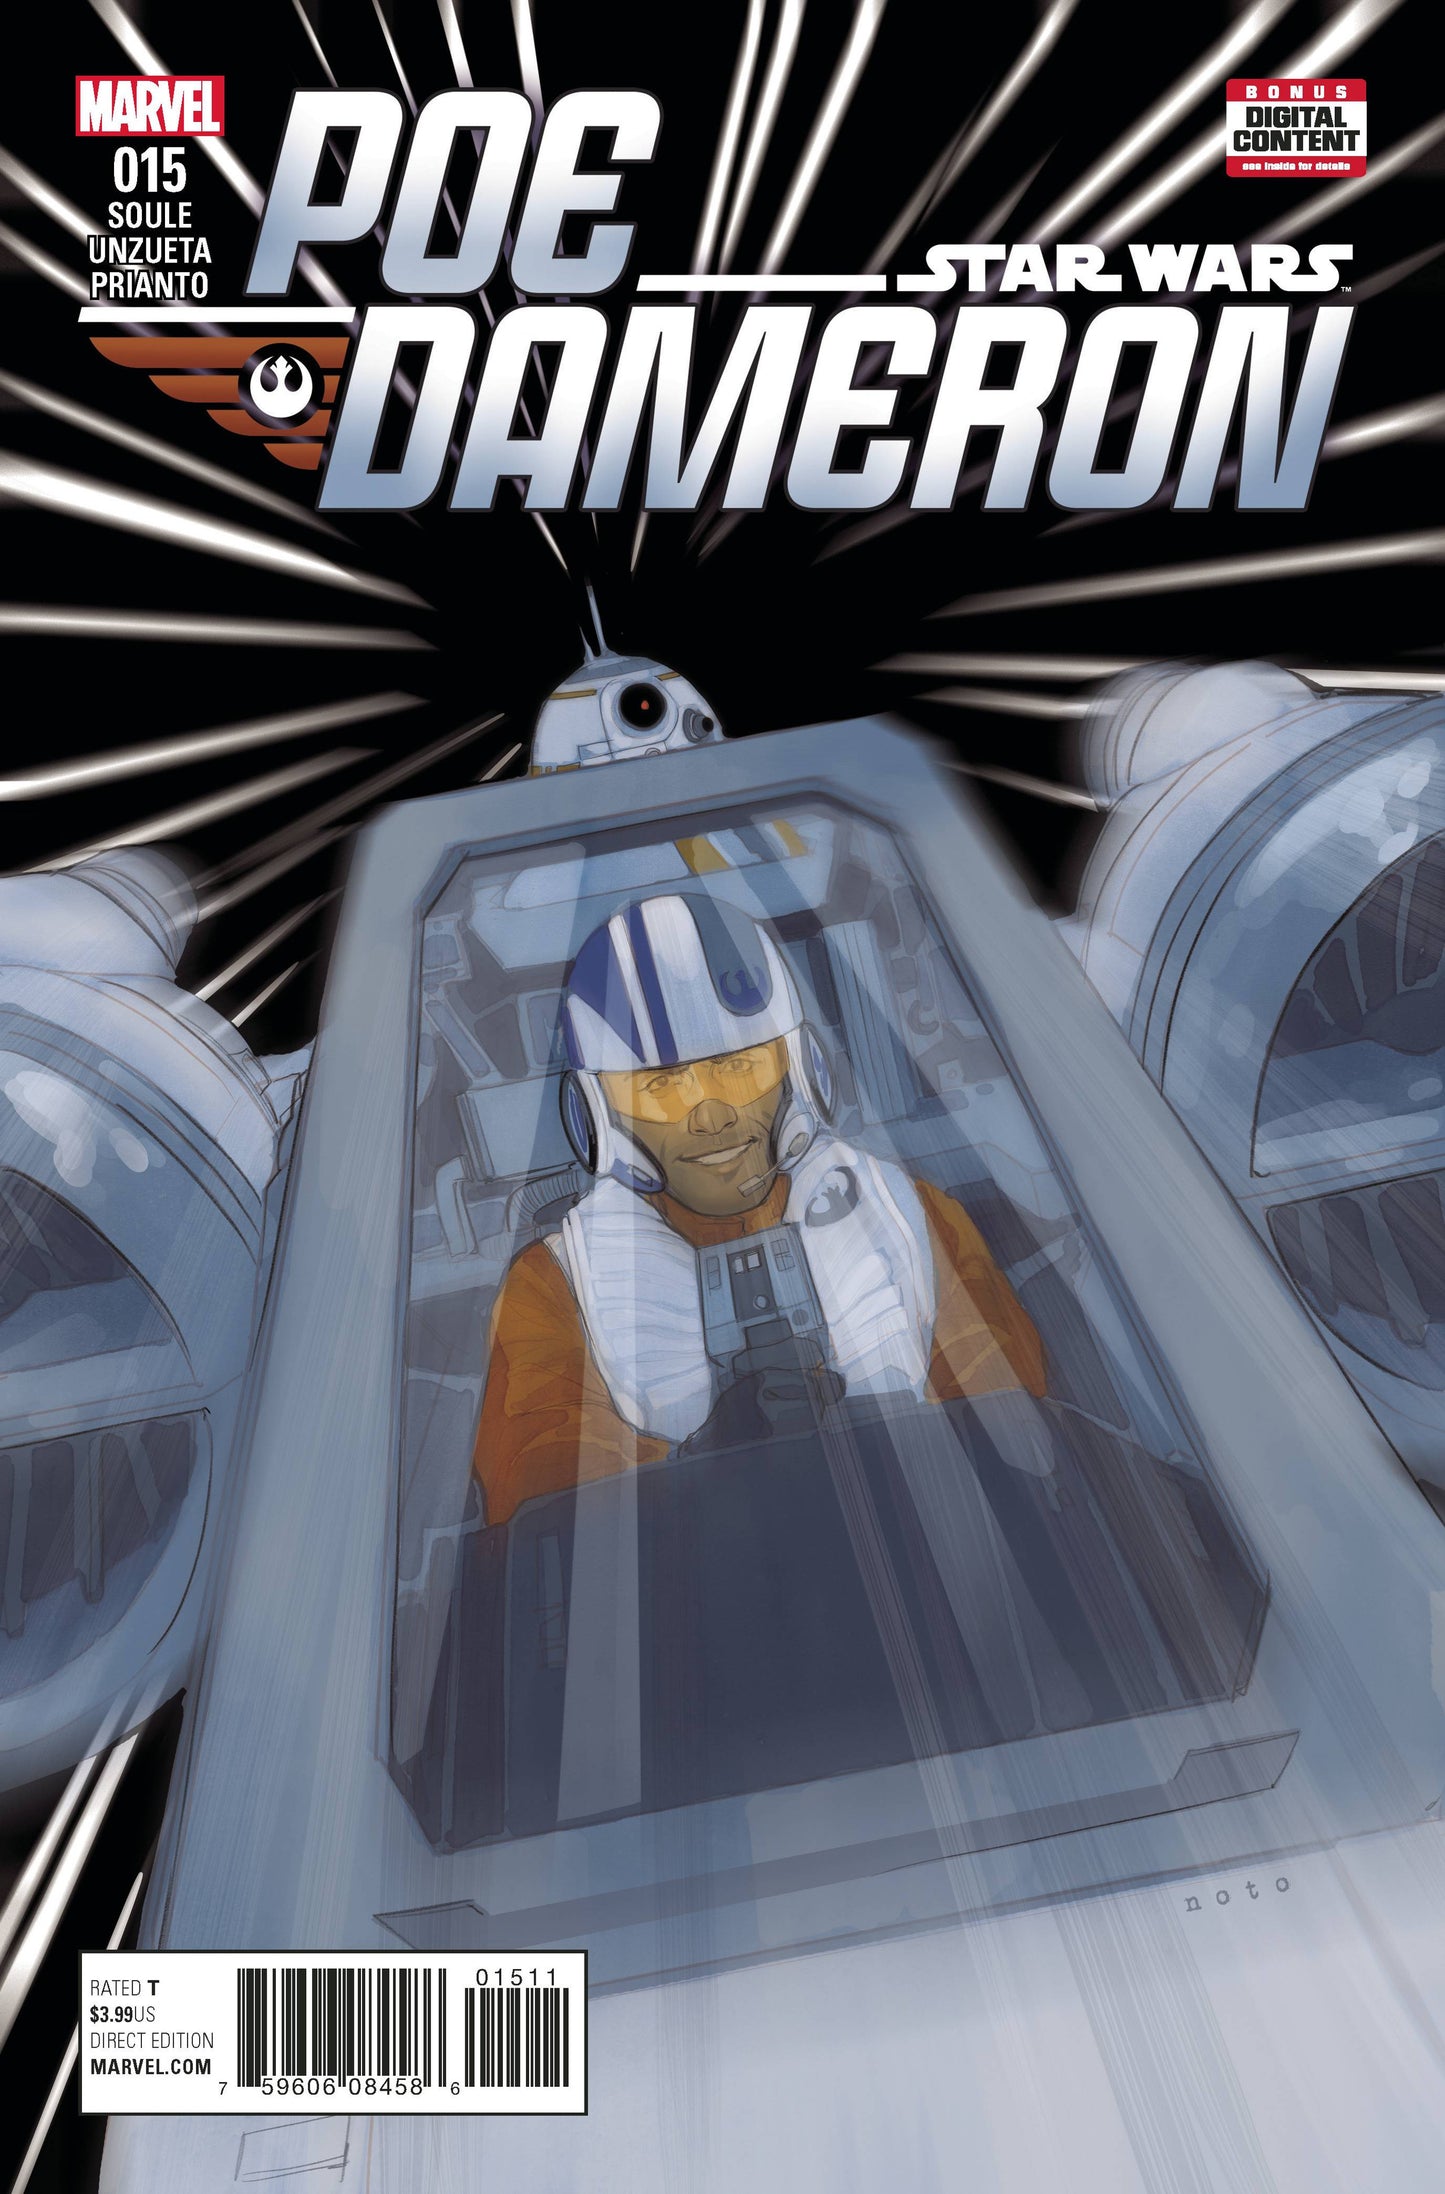 STAR WARS POE DAMERON #15 COVER